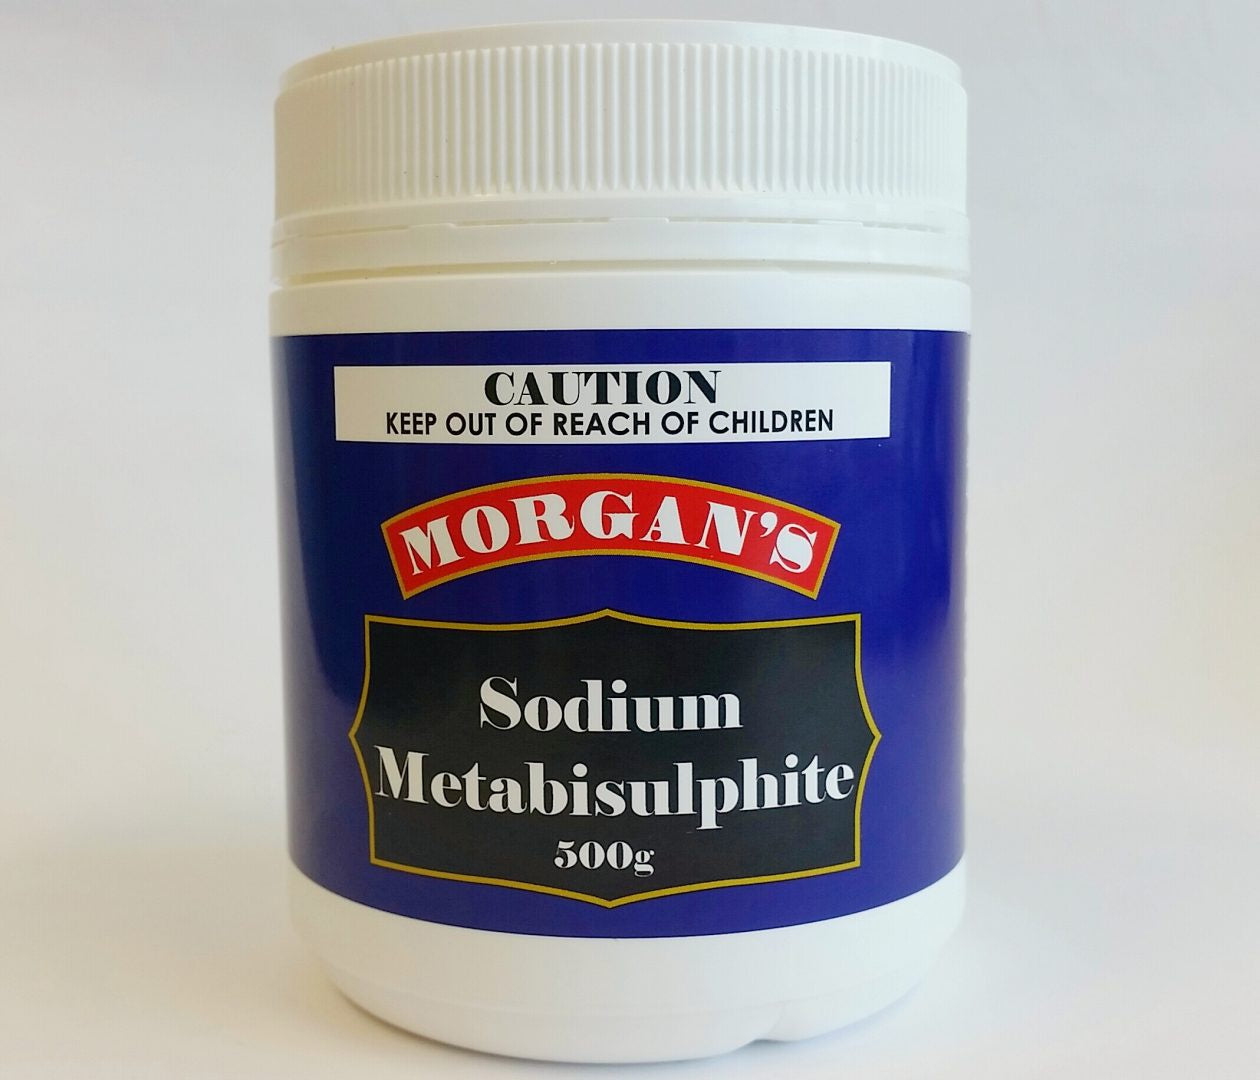 Morgan's Sodium Metabisulphite